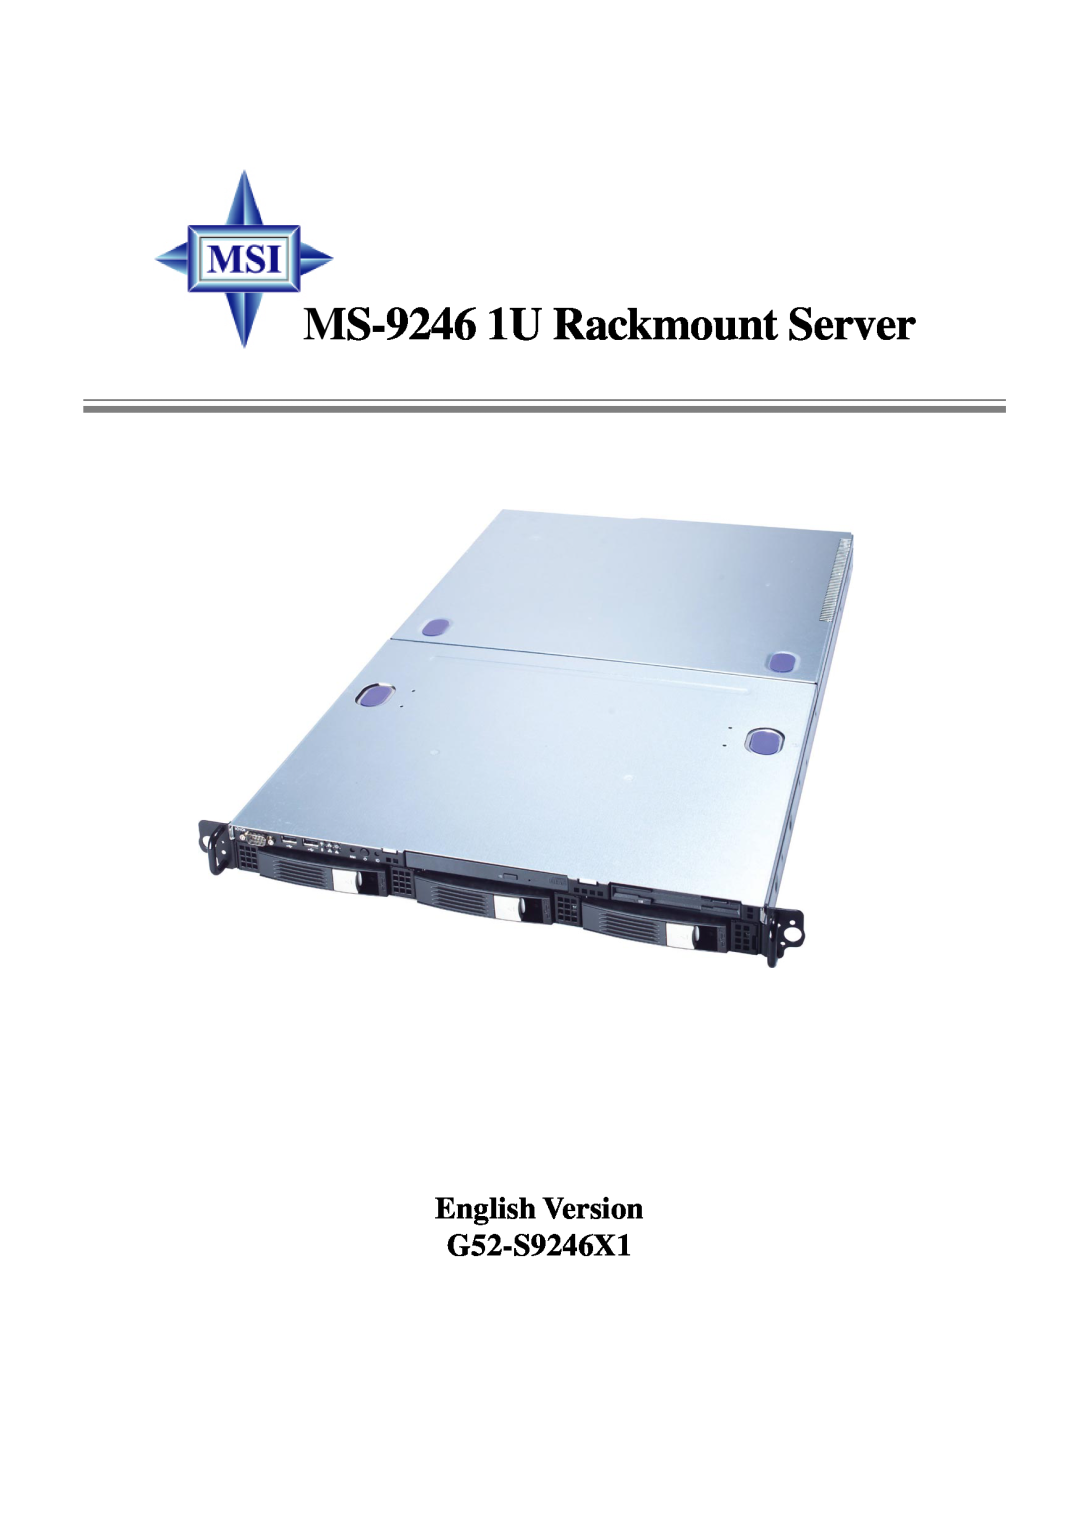 MSI manual MS-9246 1U Rackmount Server, English Version G52-S9246X1 